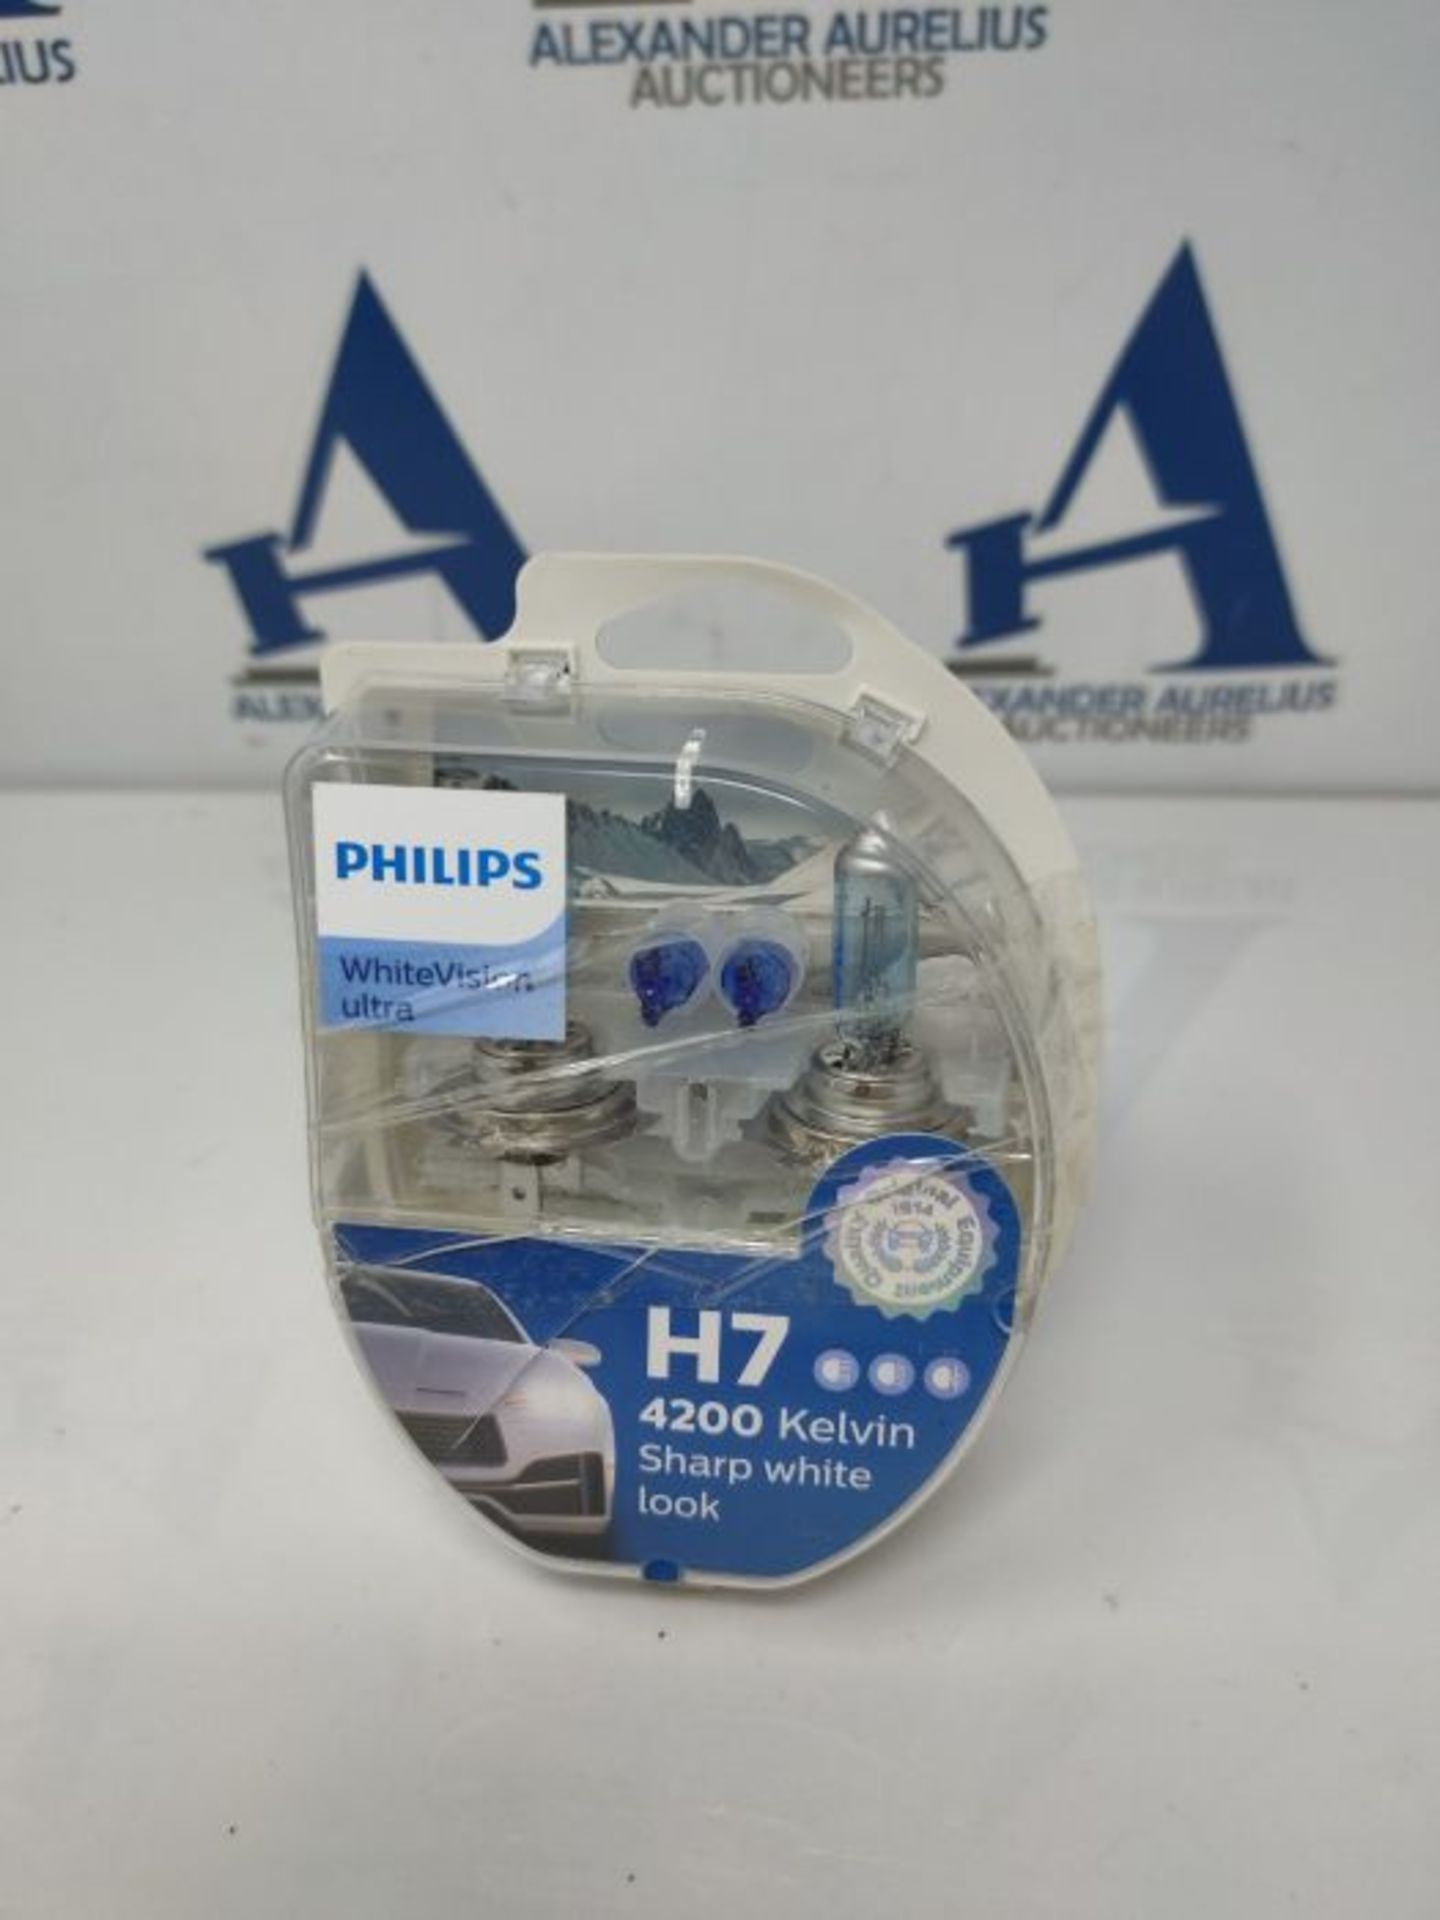 Philips WhiteVision ultra H7 car headlight bulb, 4.200K, set of 2 - Image 2 of 3